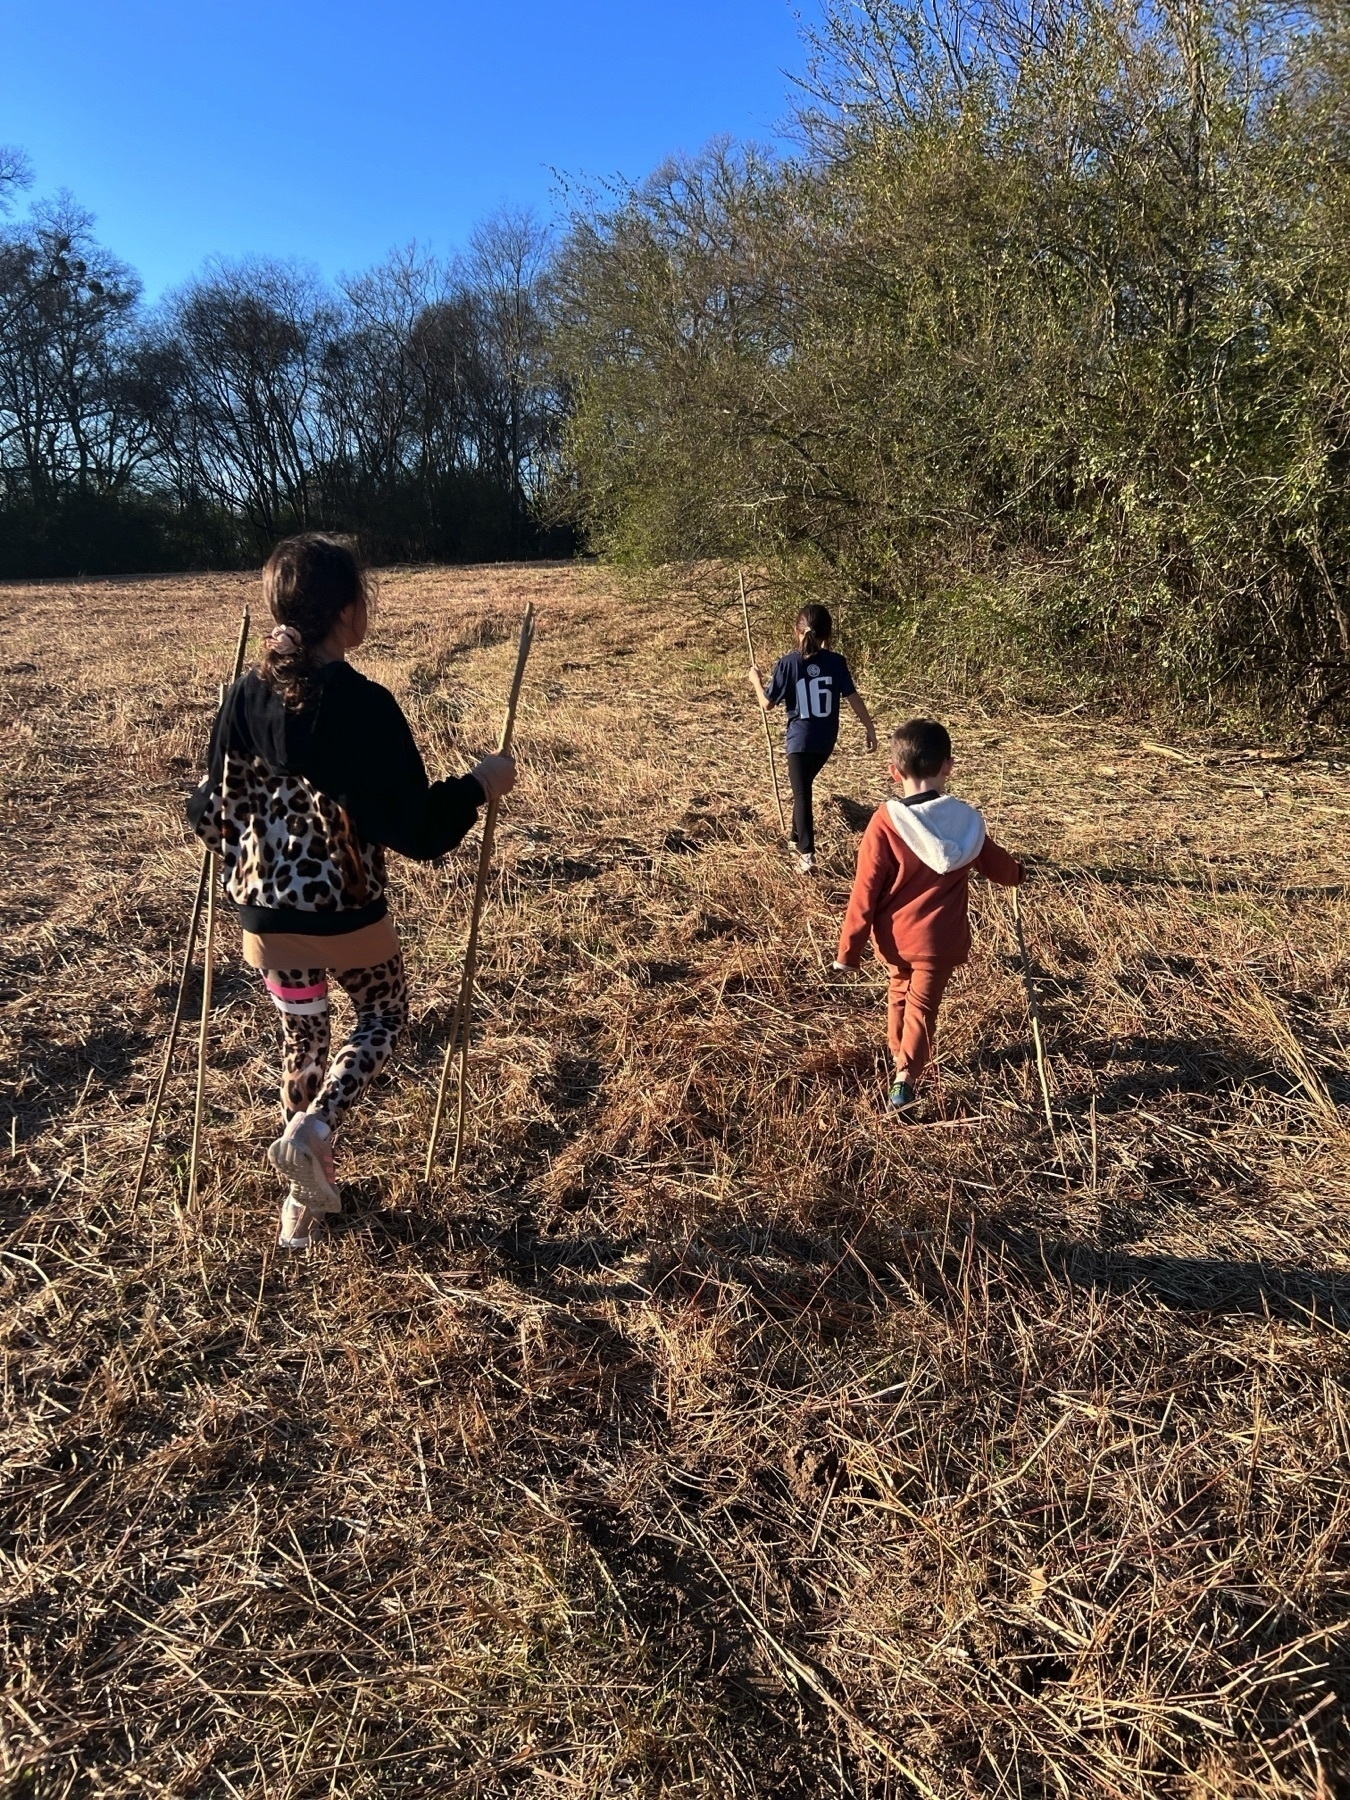 Three children with bamboo “hiking sticks” walking through farm land.